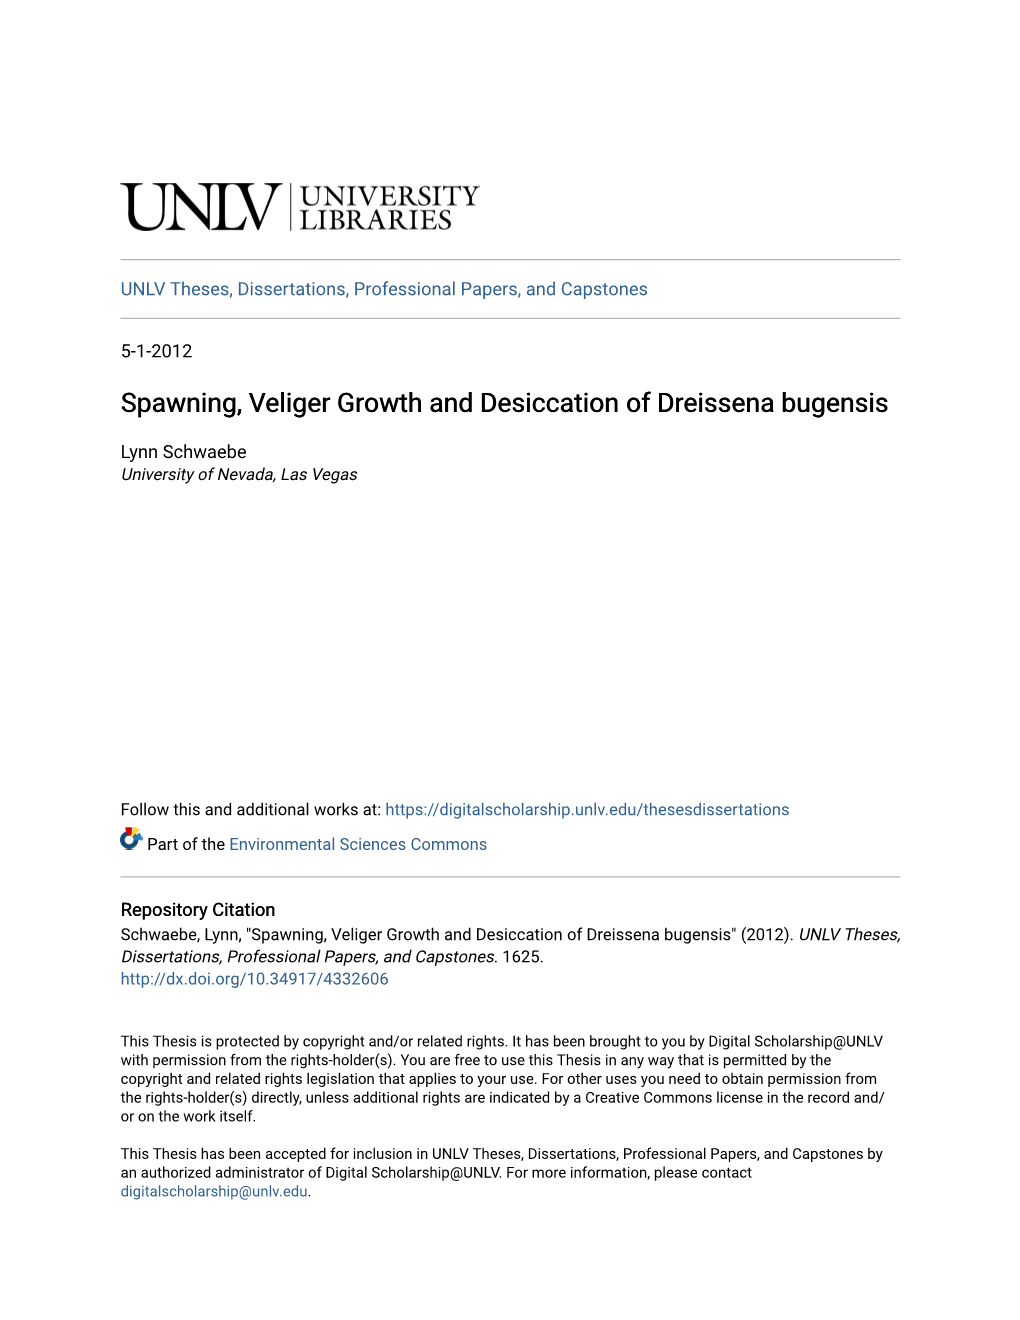 Spawning, Veliger Growth and Desiccation of Dreissena Bugensis